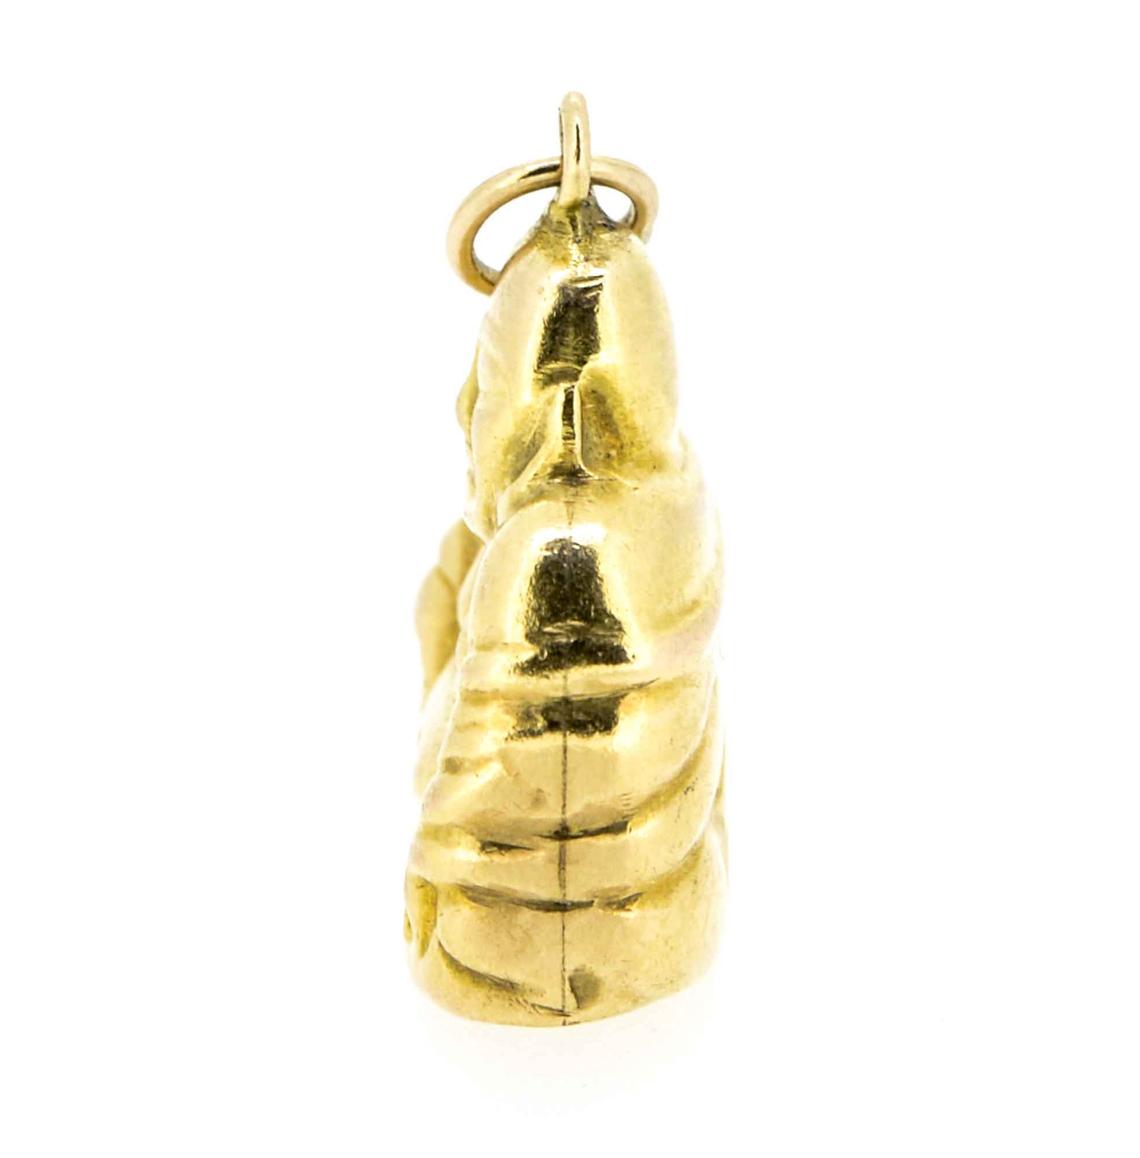 1960s 14ct Gold Buddha Charm/Pendant